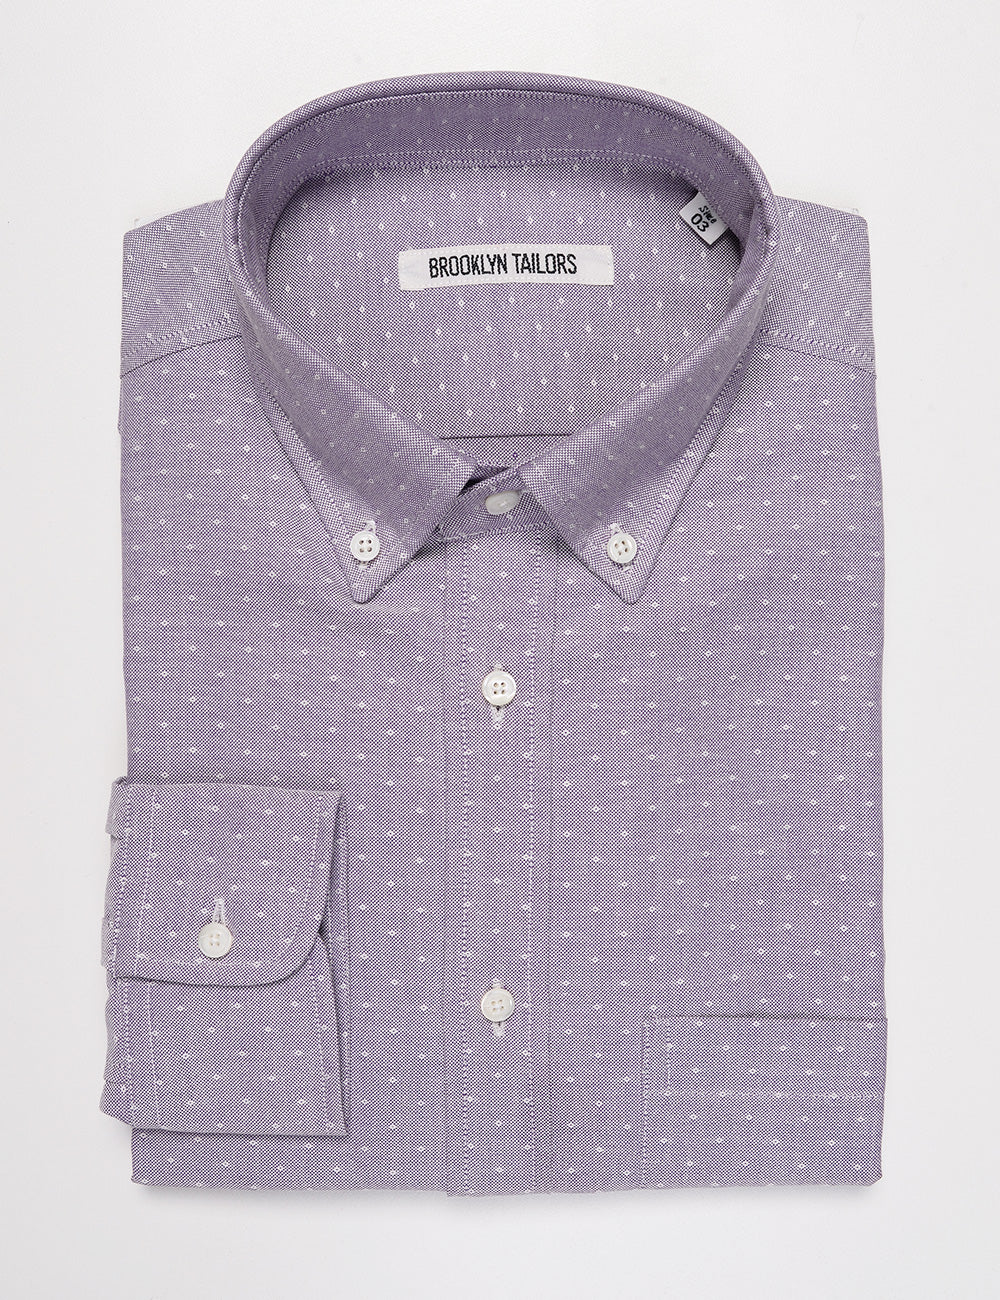 Brooklyn Tailors BKT10 Slim Casual Shirt in Eyelet Oxford - Lavender flat shot folded